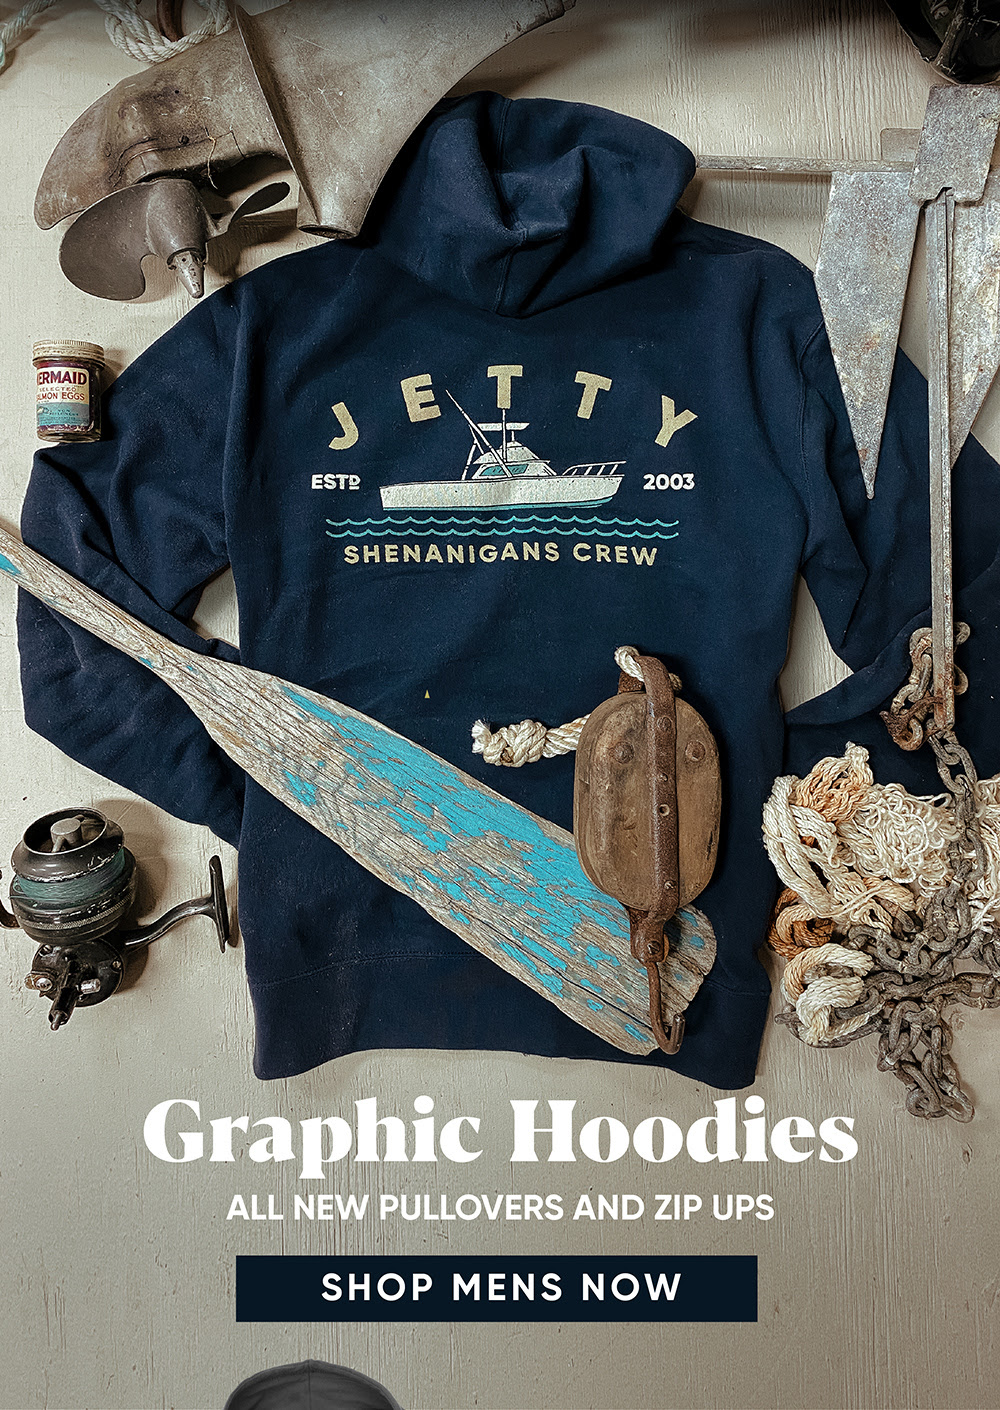 Graphic hoodies